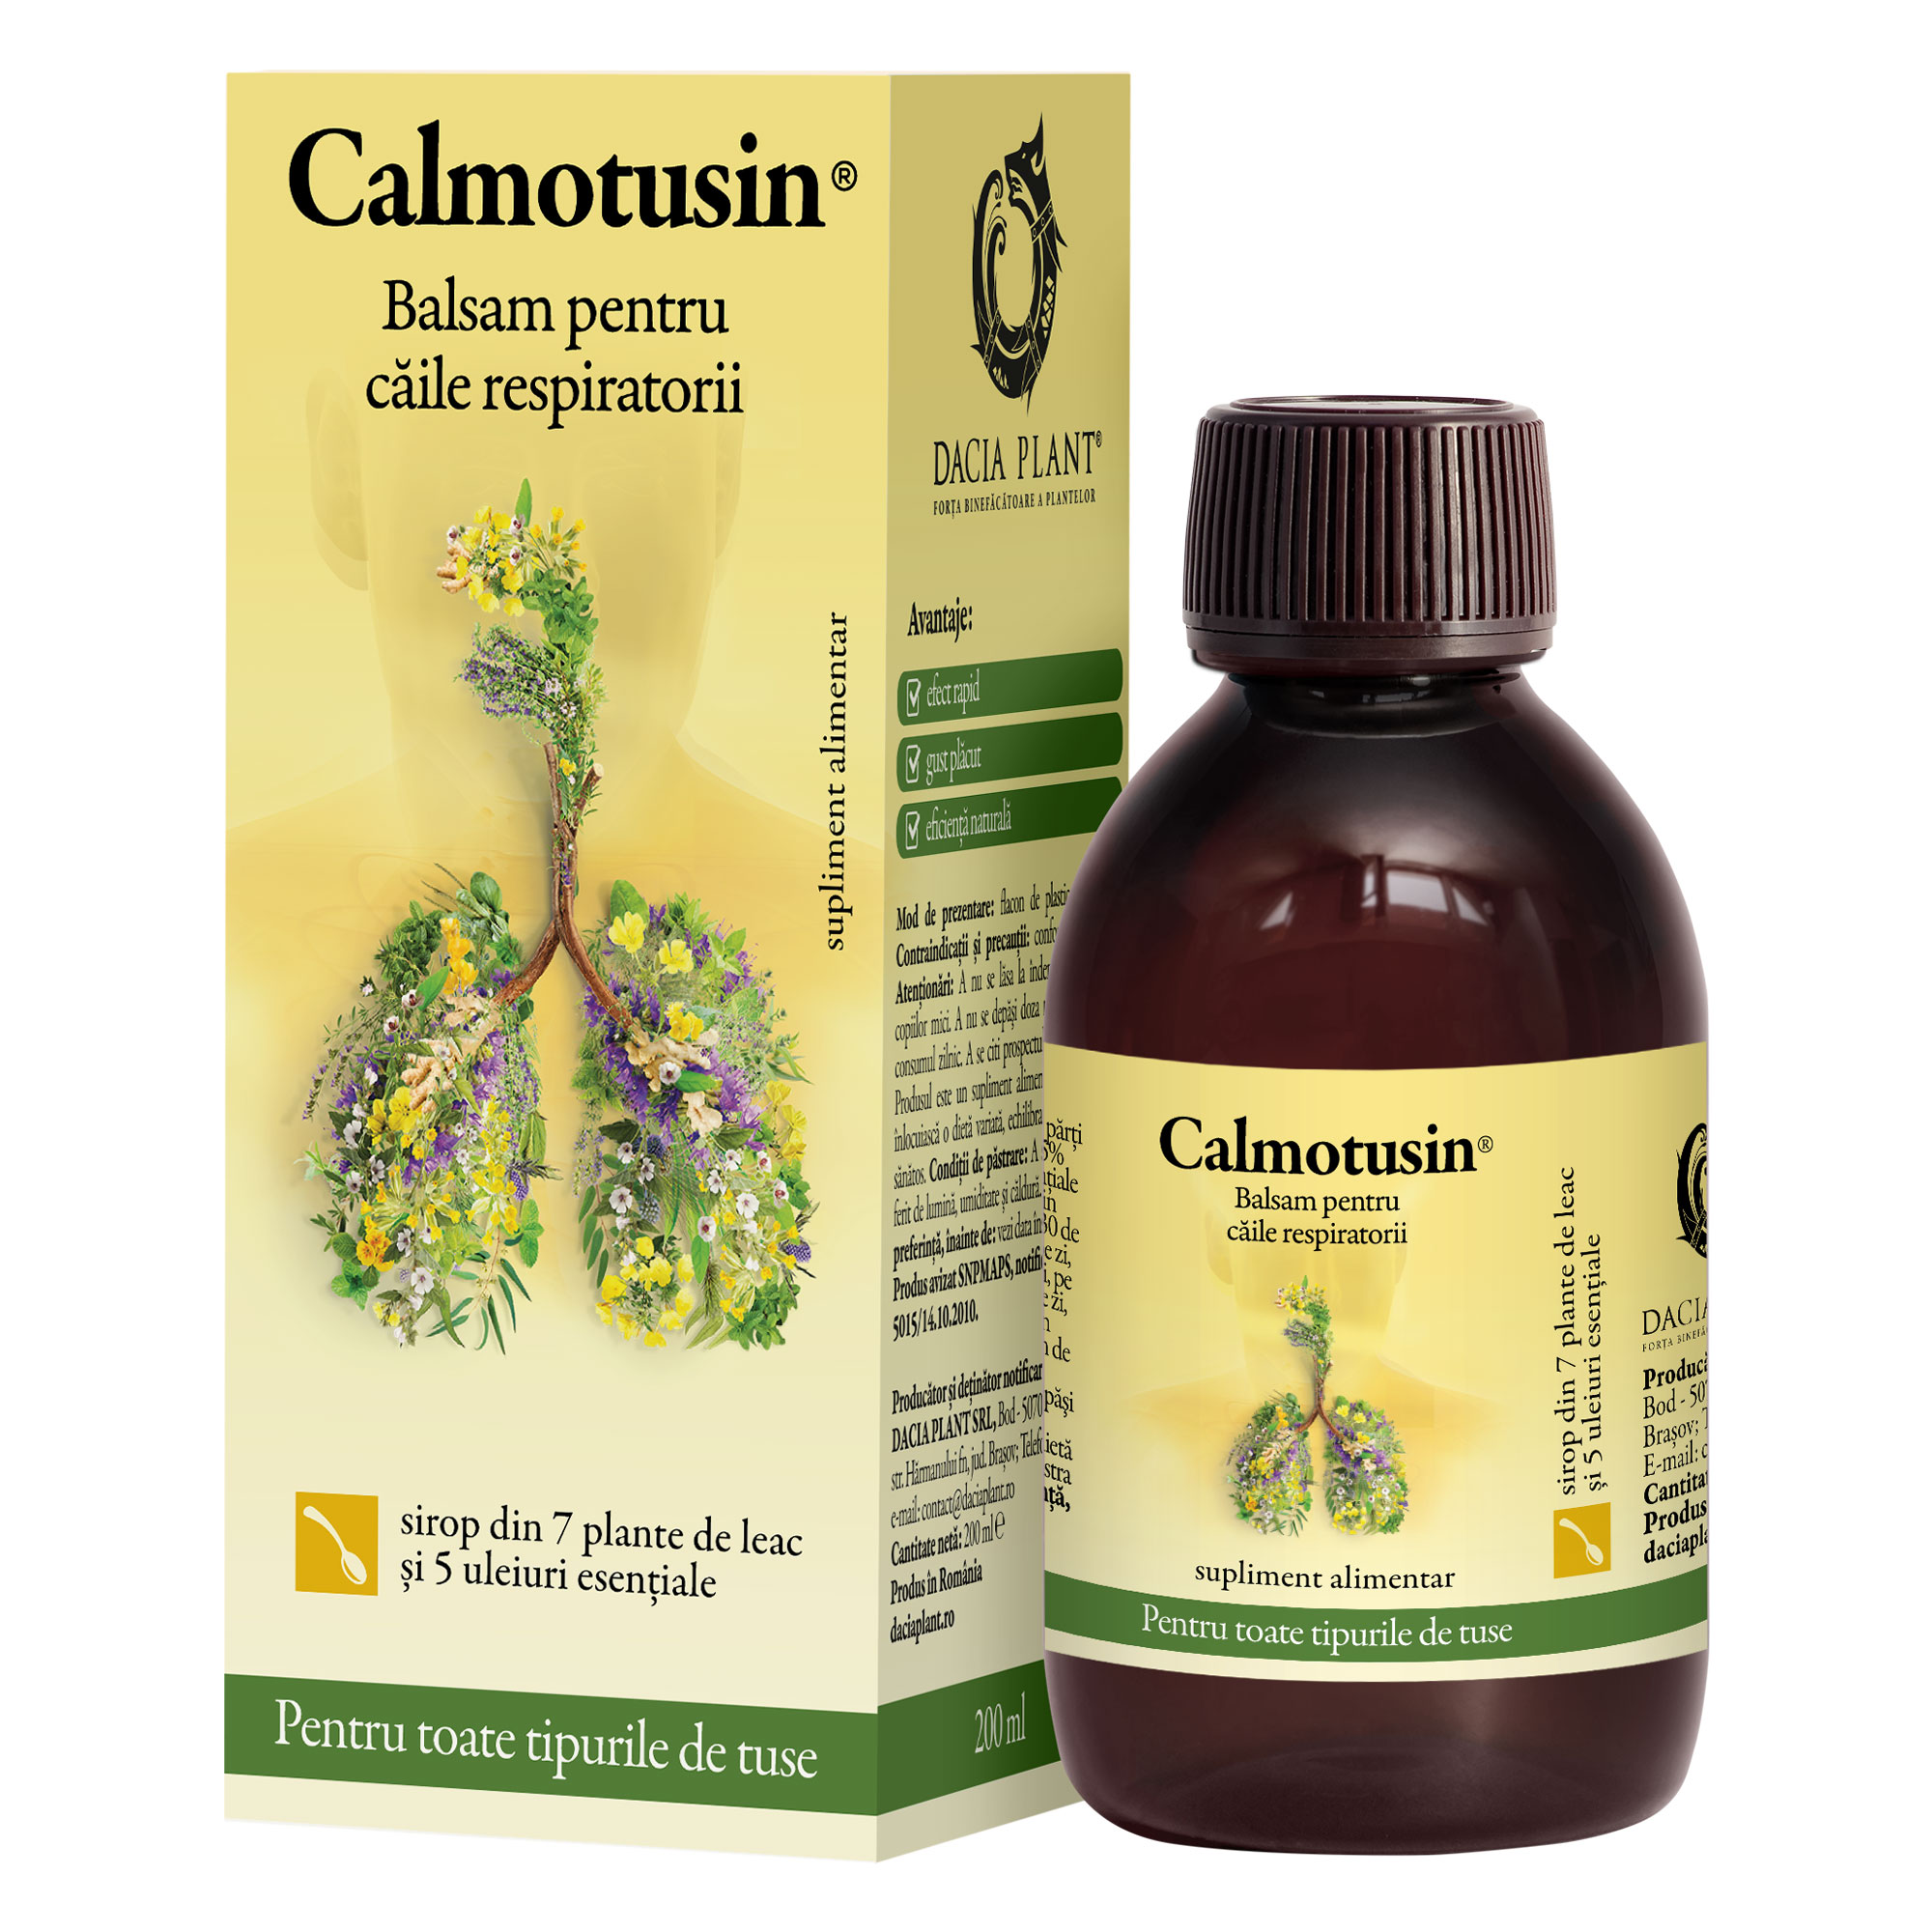 Calmotusin sirop din 7 plante medicinale si 5 uleiuri esentiale Dacia Plant – 200 ml